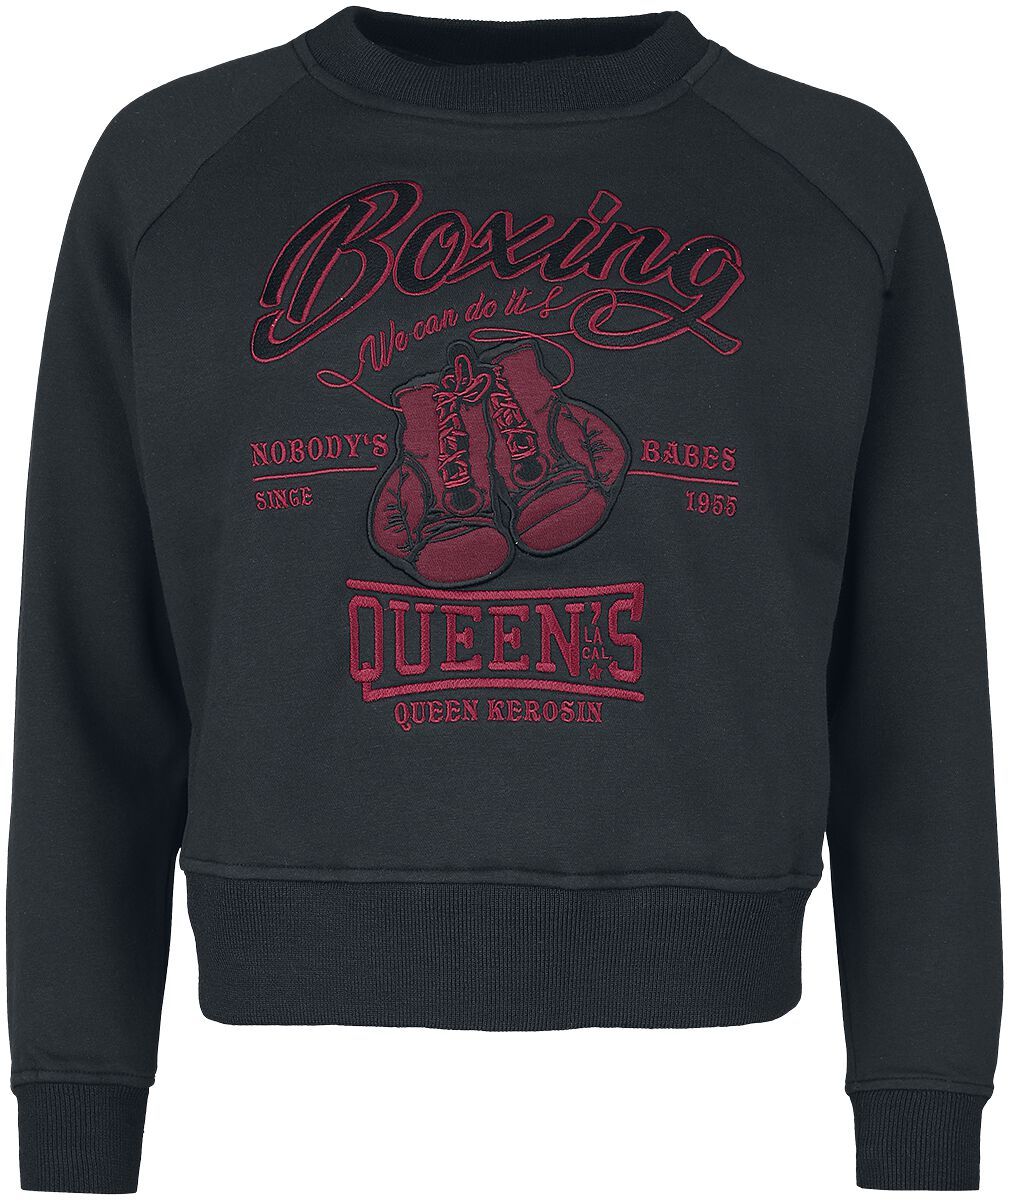 Sweat-shirt Rockabilly de Queen Kerosin - Boxing - 4XL - pour Femme - noir/rouge